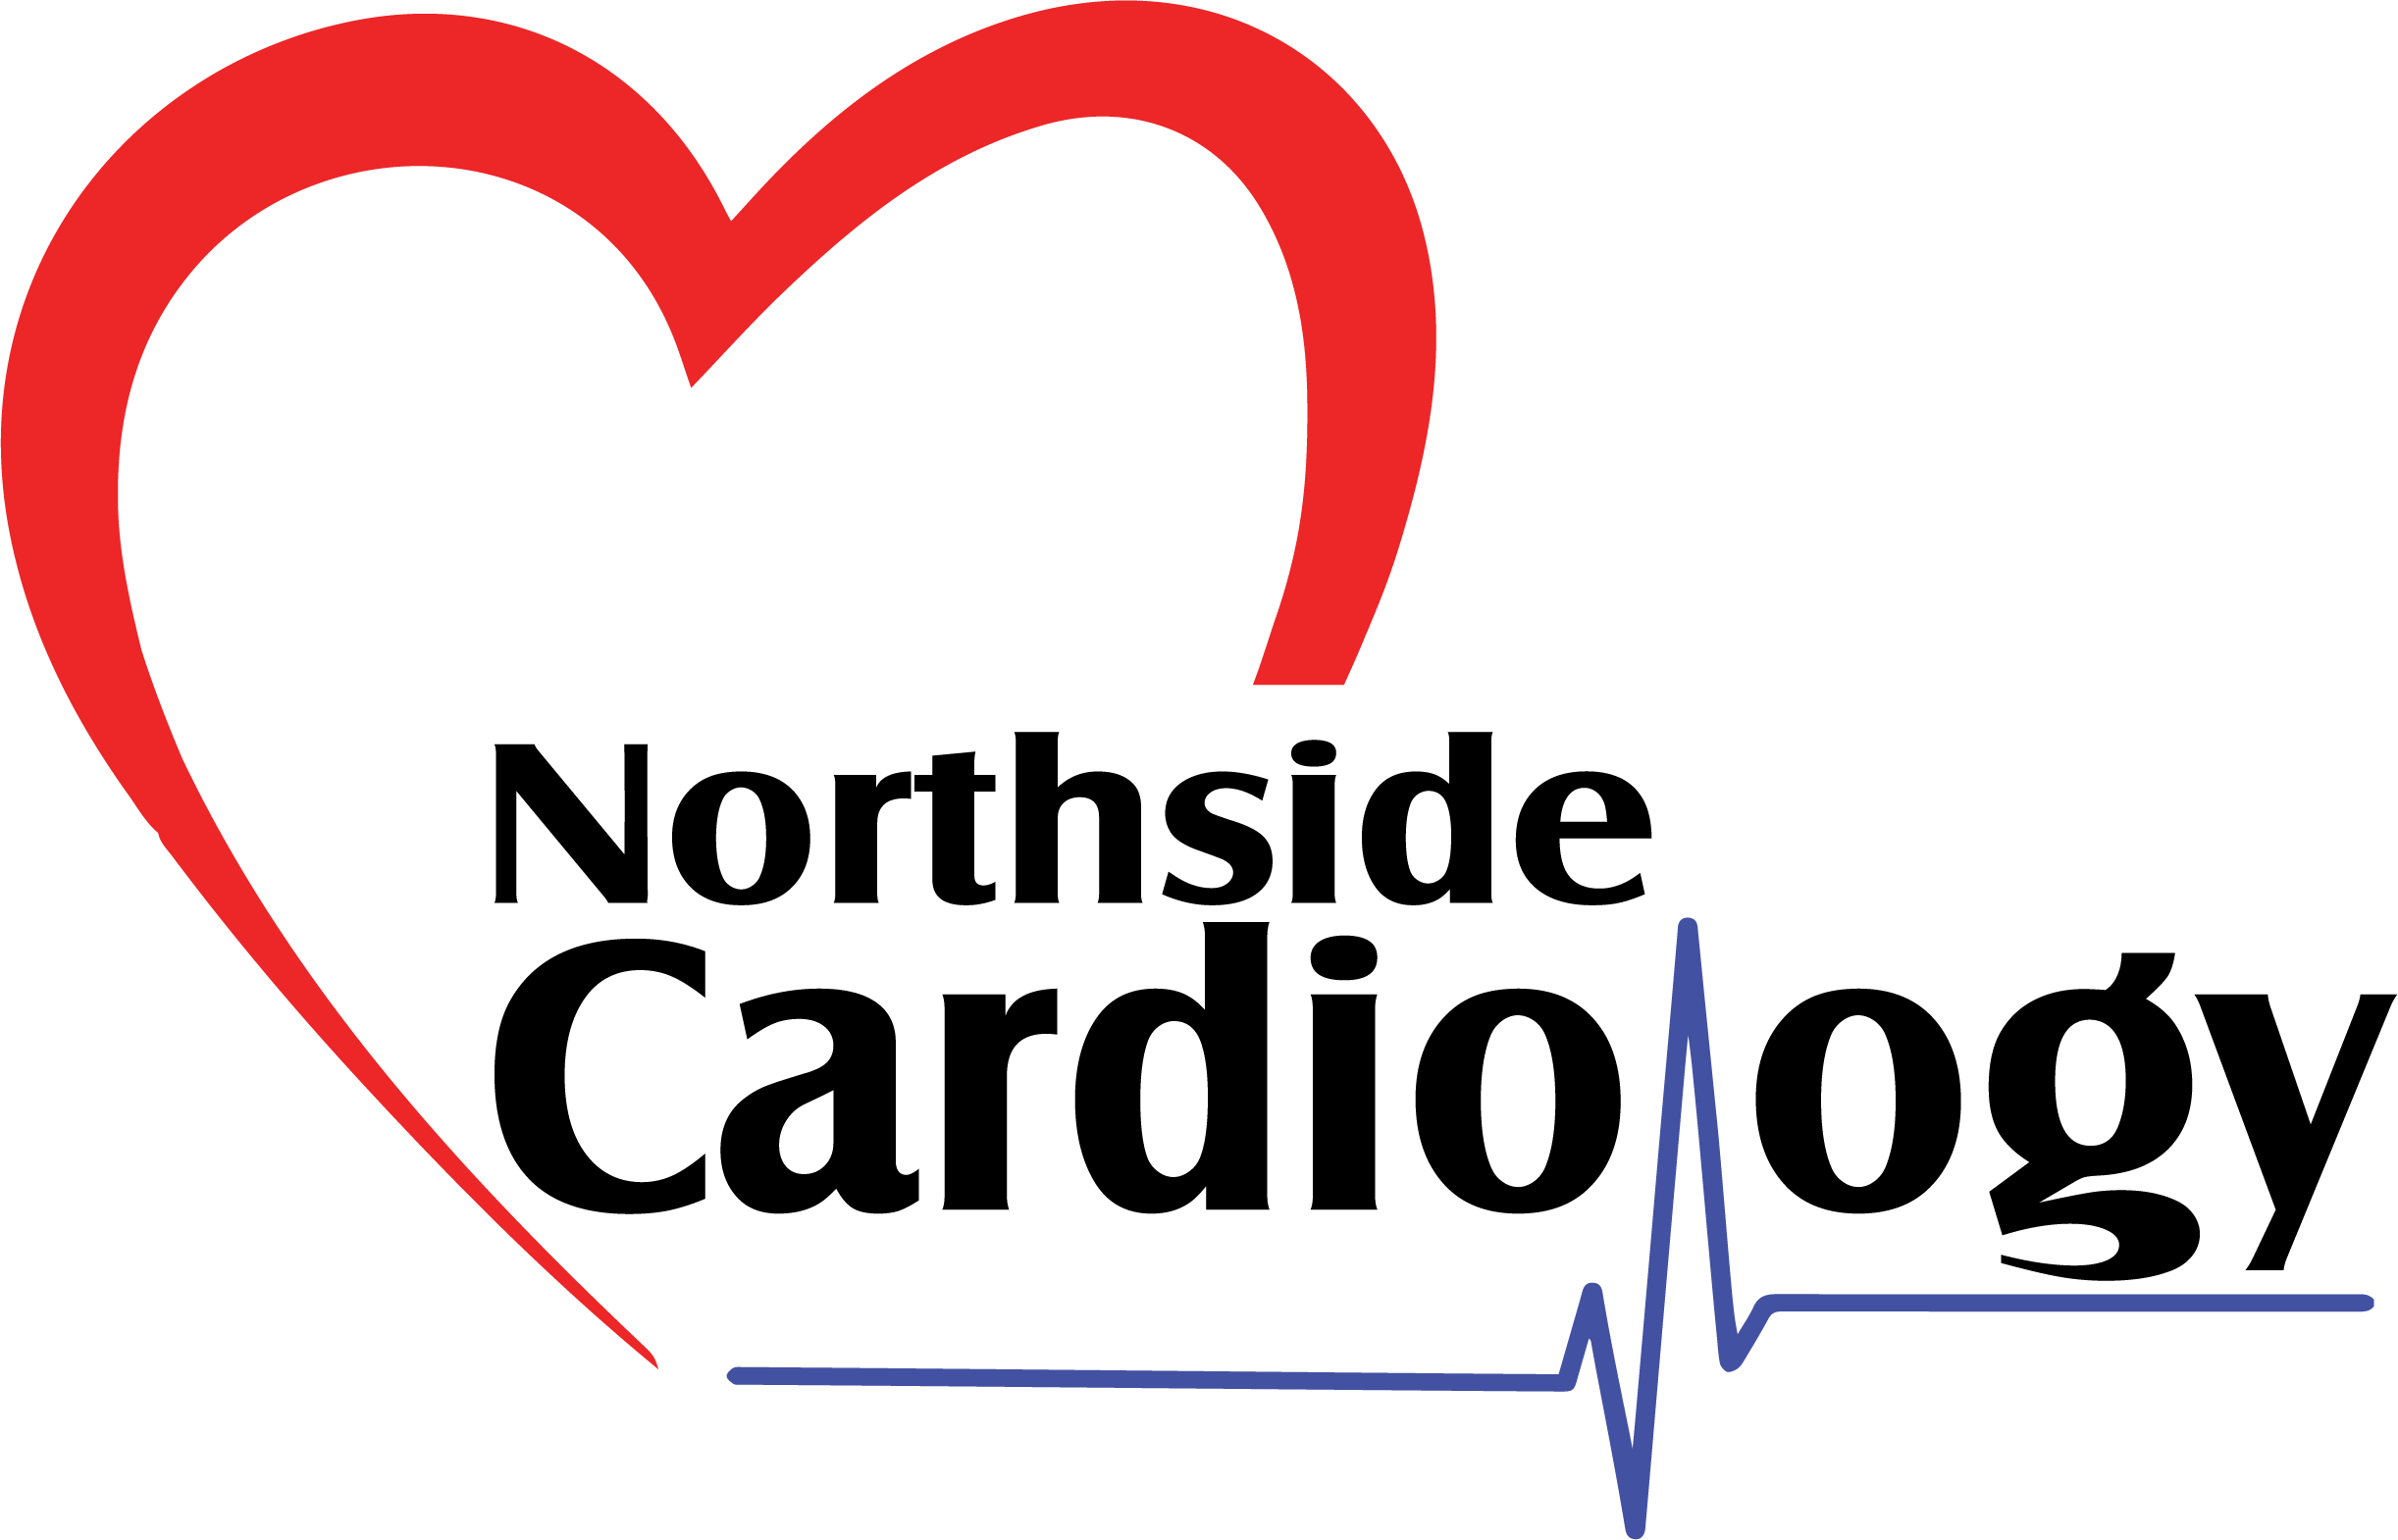 Northside Cardiology PLLC